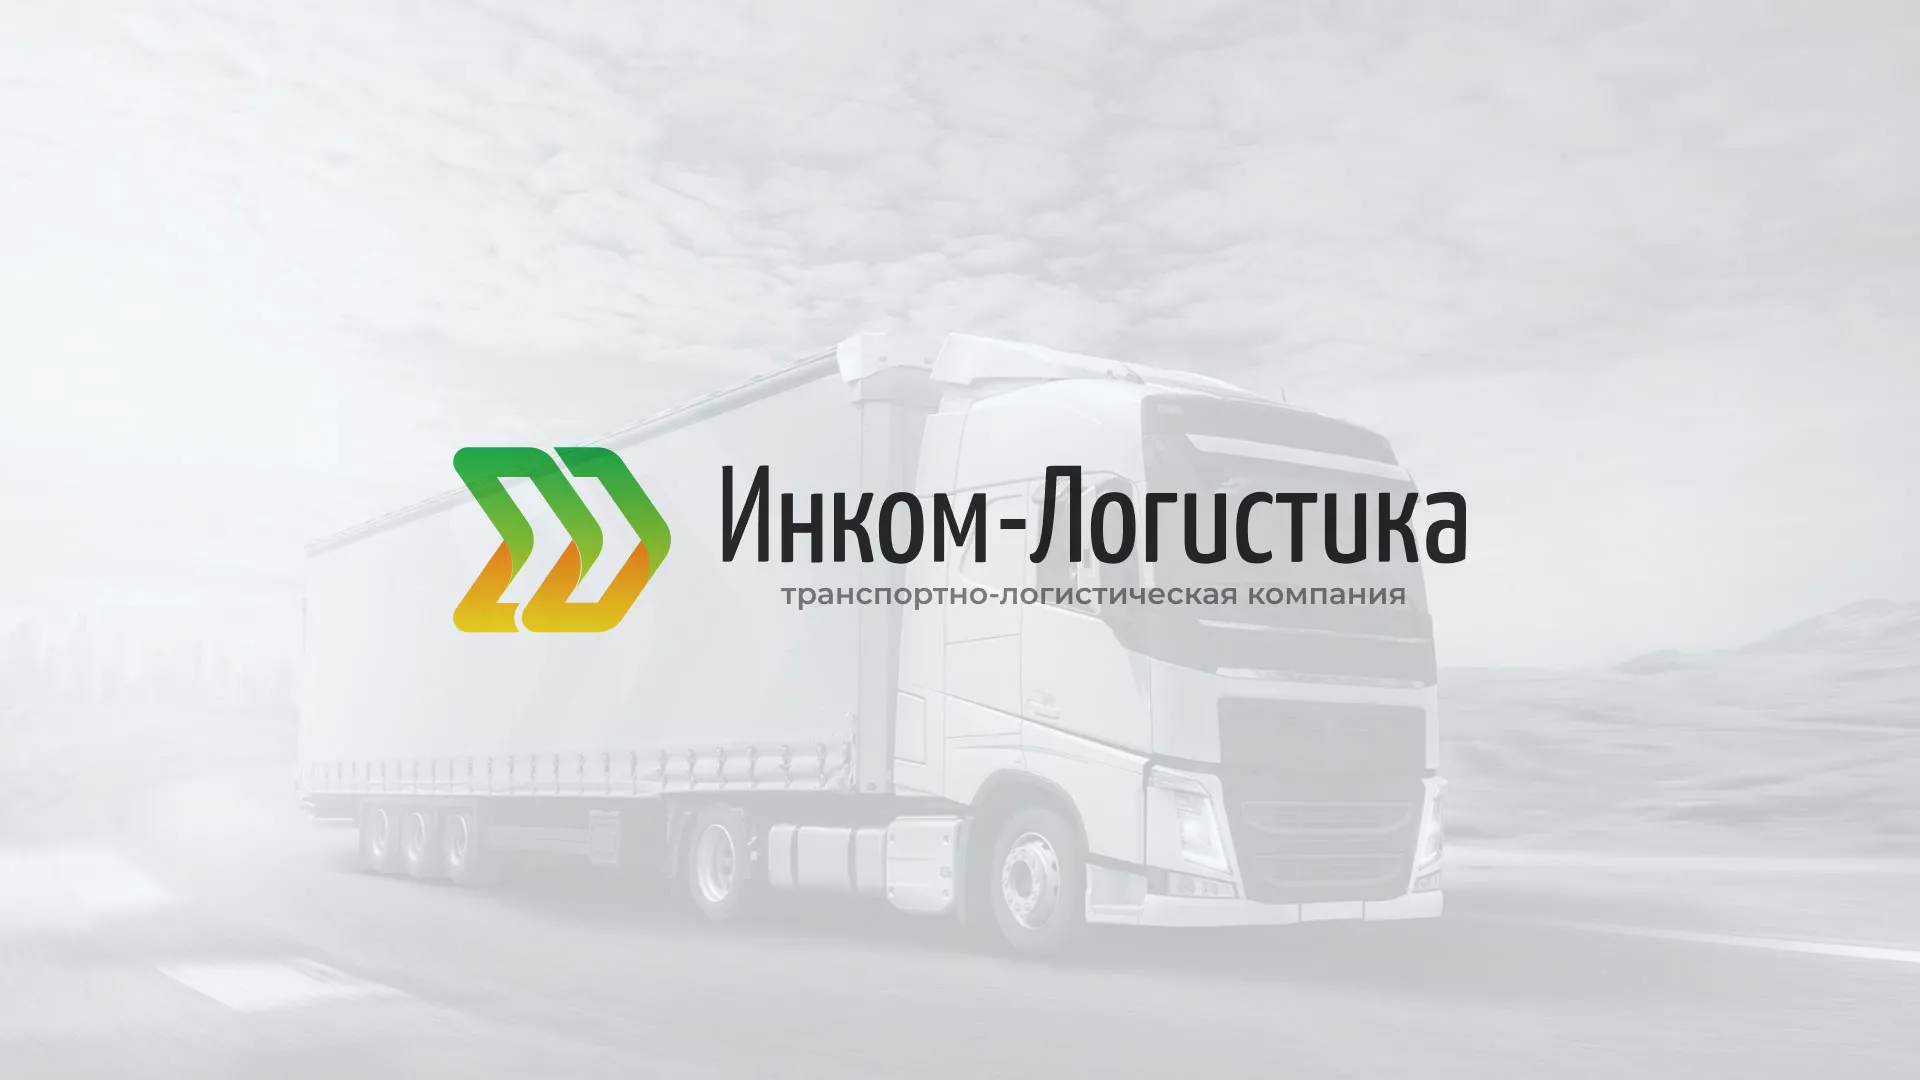 Разработка логотипа и сайта компании «Инком-Логистика» в Киреевске